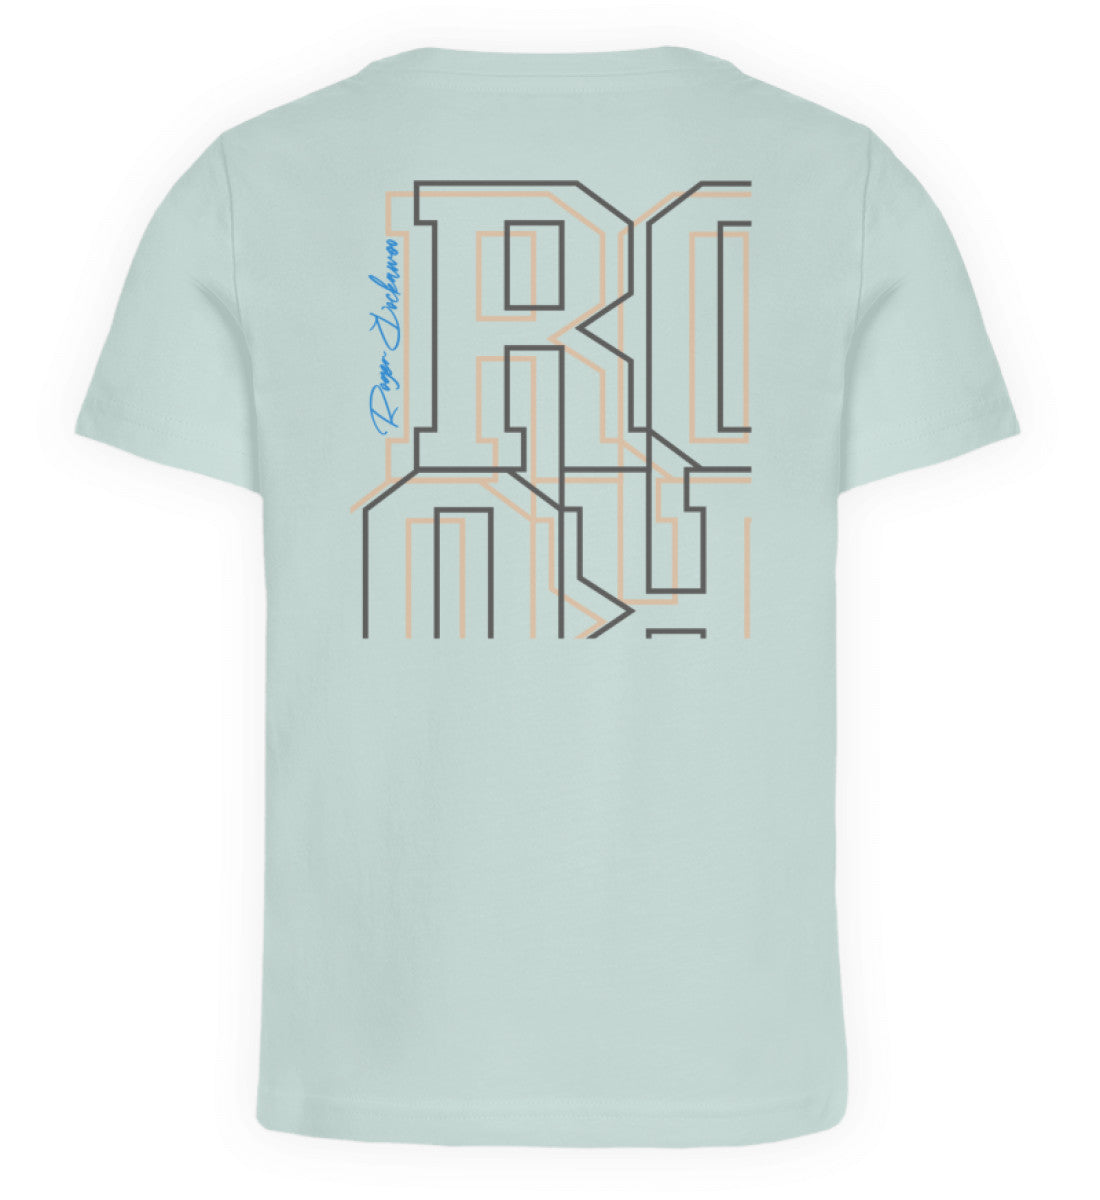 Carribean Blue farbiges Kinder T-Shirt für Mädchen und Jungen bedruckt mit dem Design der Roger Rockawoo Kollektion and then skateboarding came along